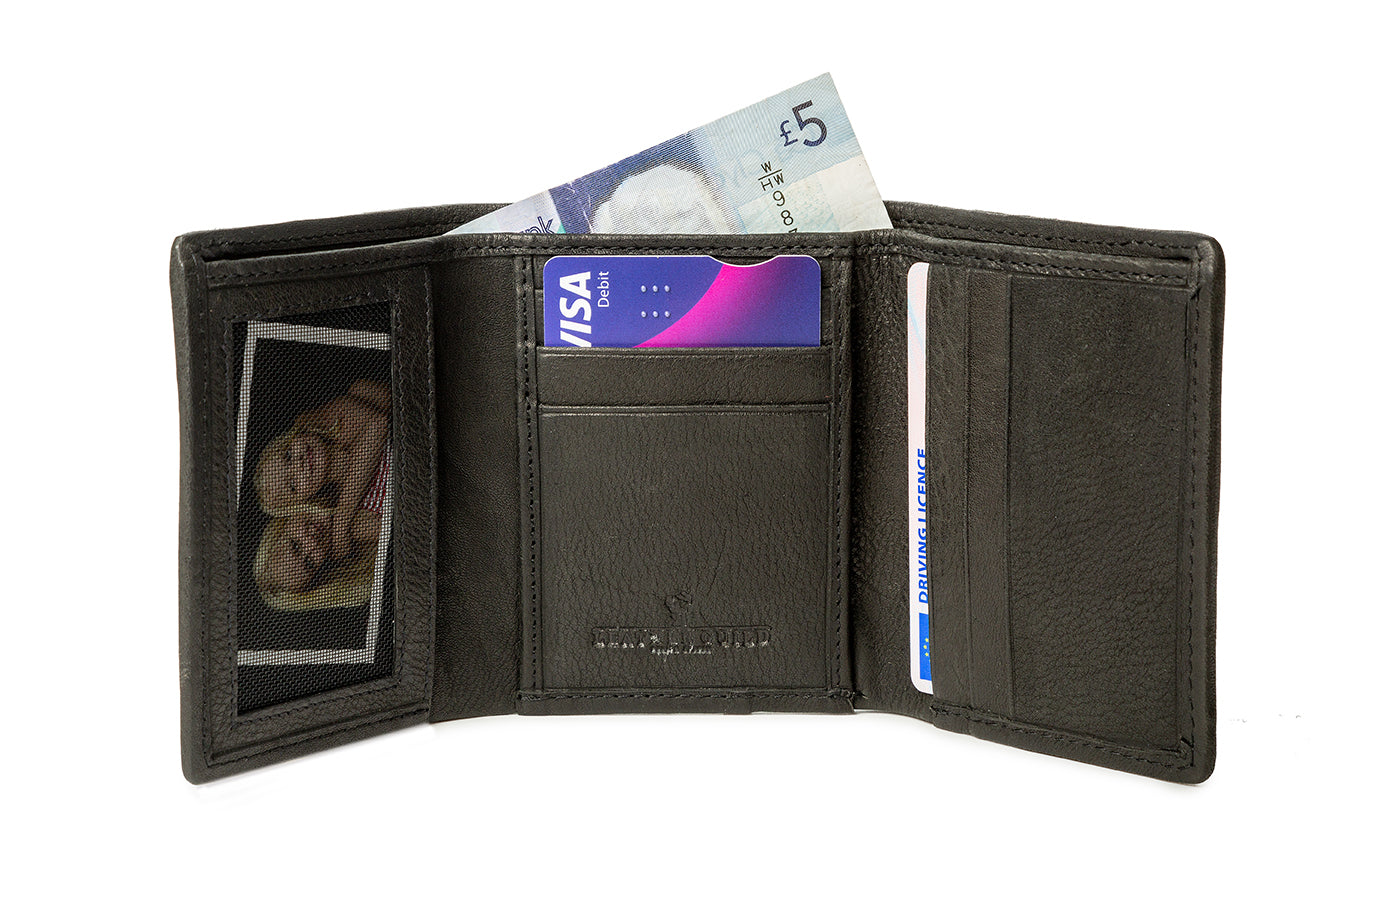 Tri Fold Classic Wallet